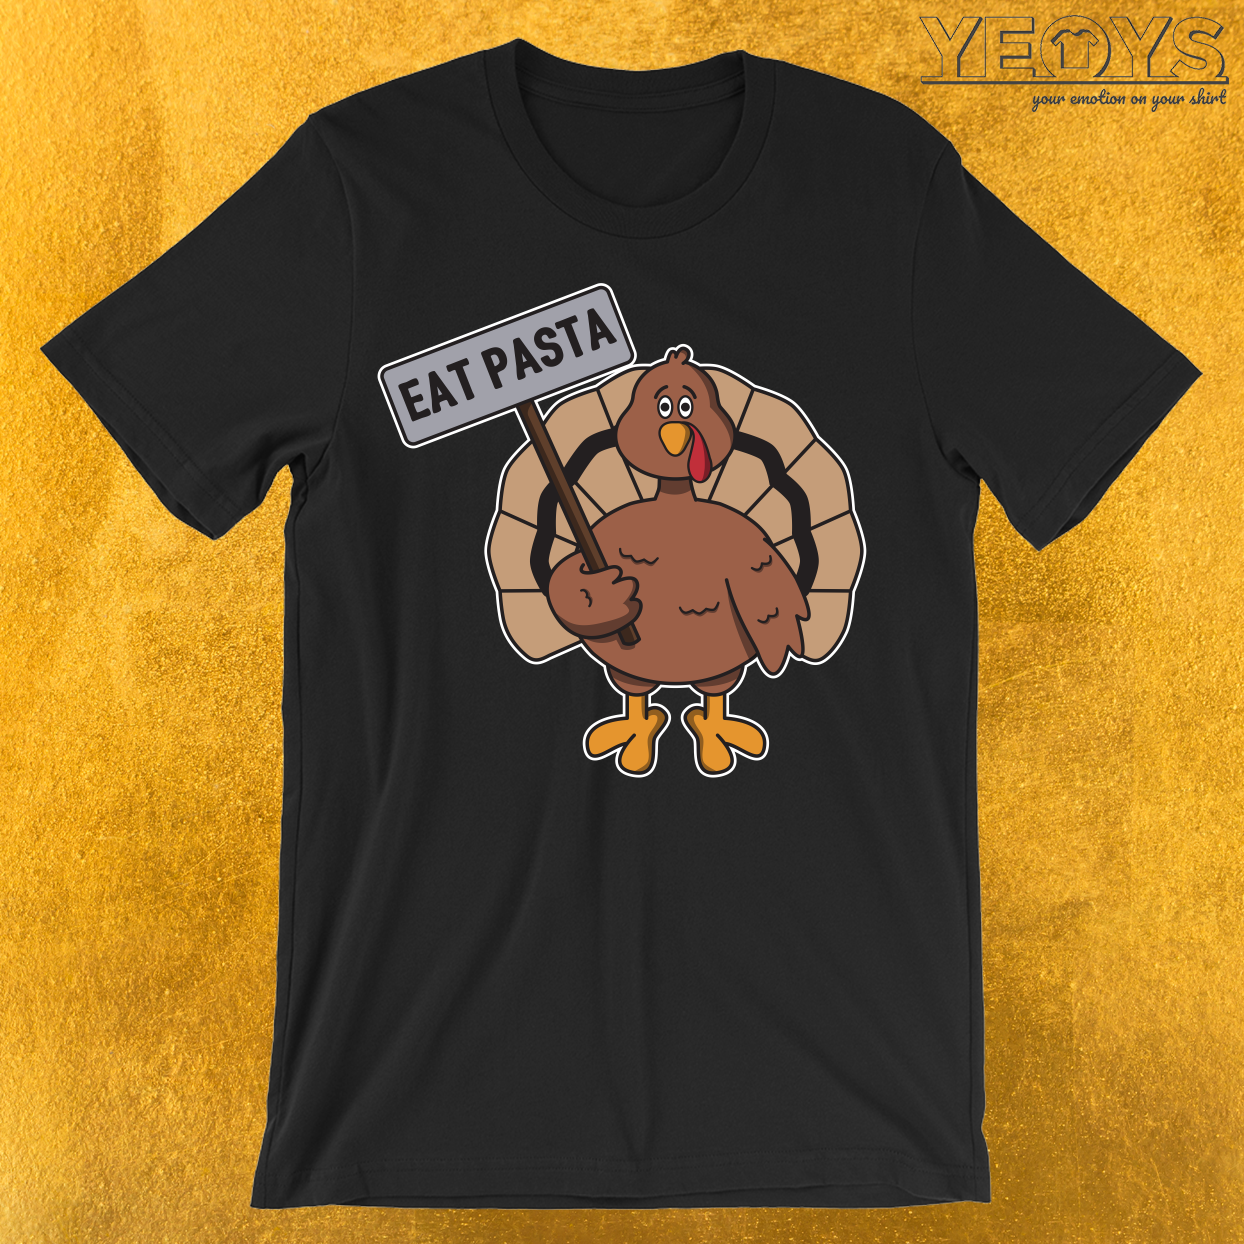 Eat Pasta Not Turkey T-Shirt